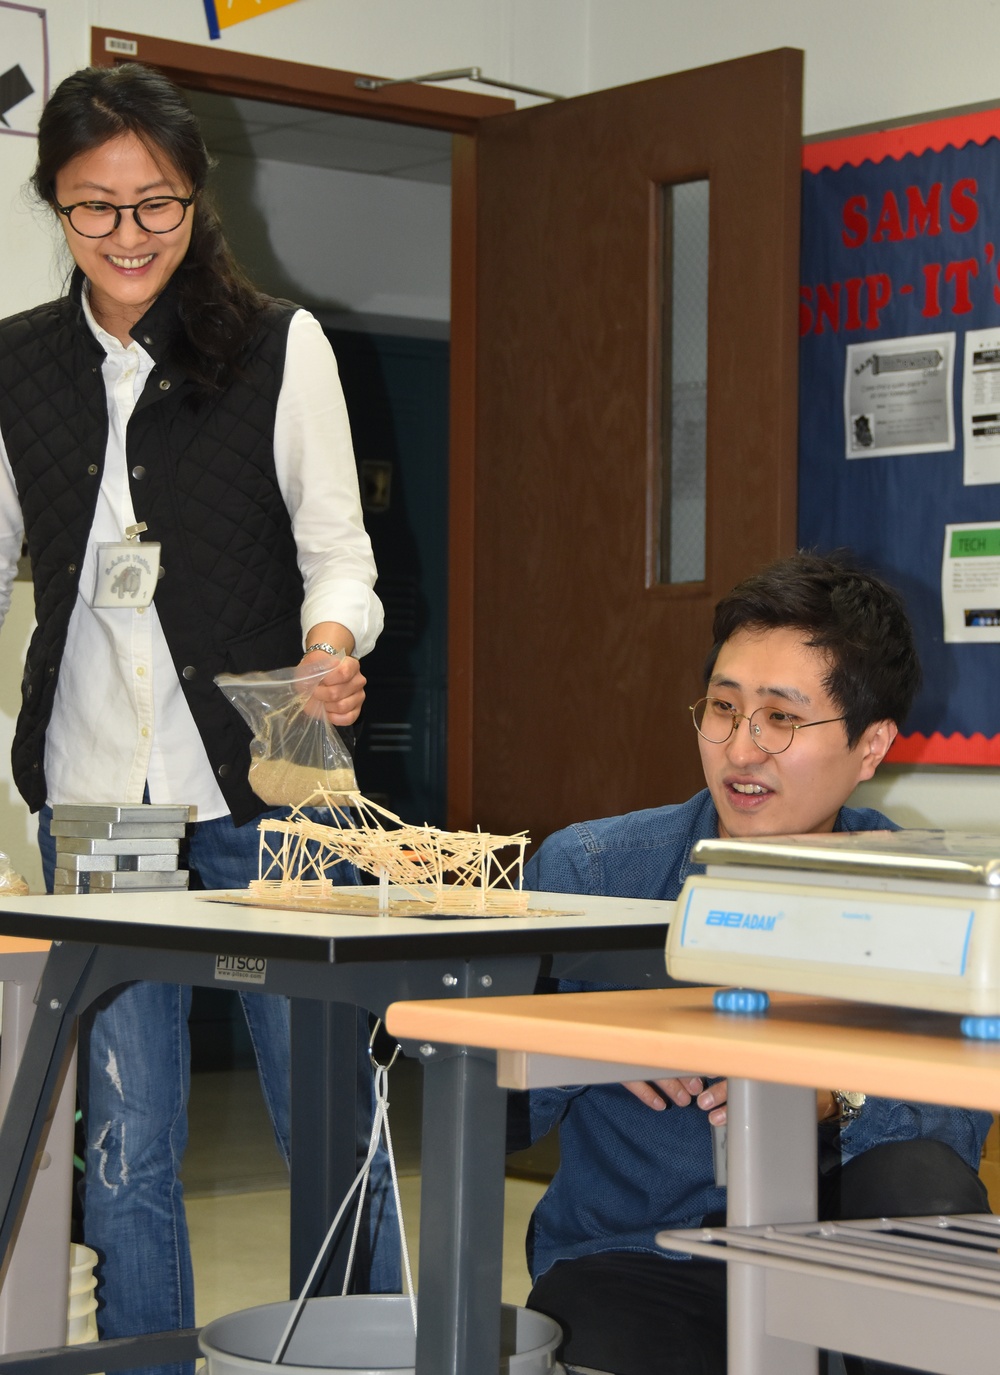 STEM event tests toothpick bridges